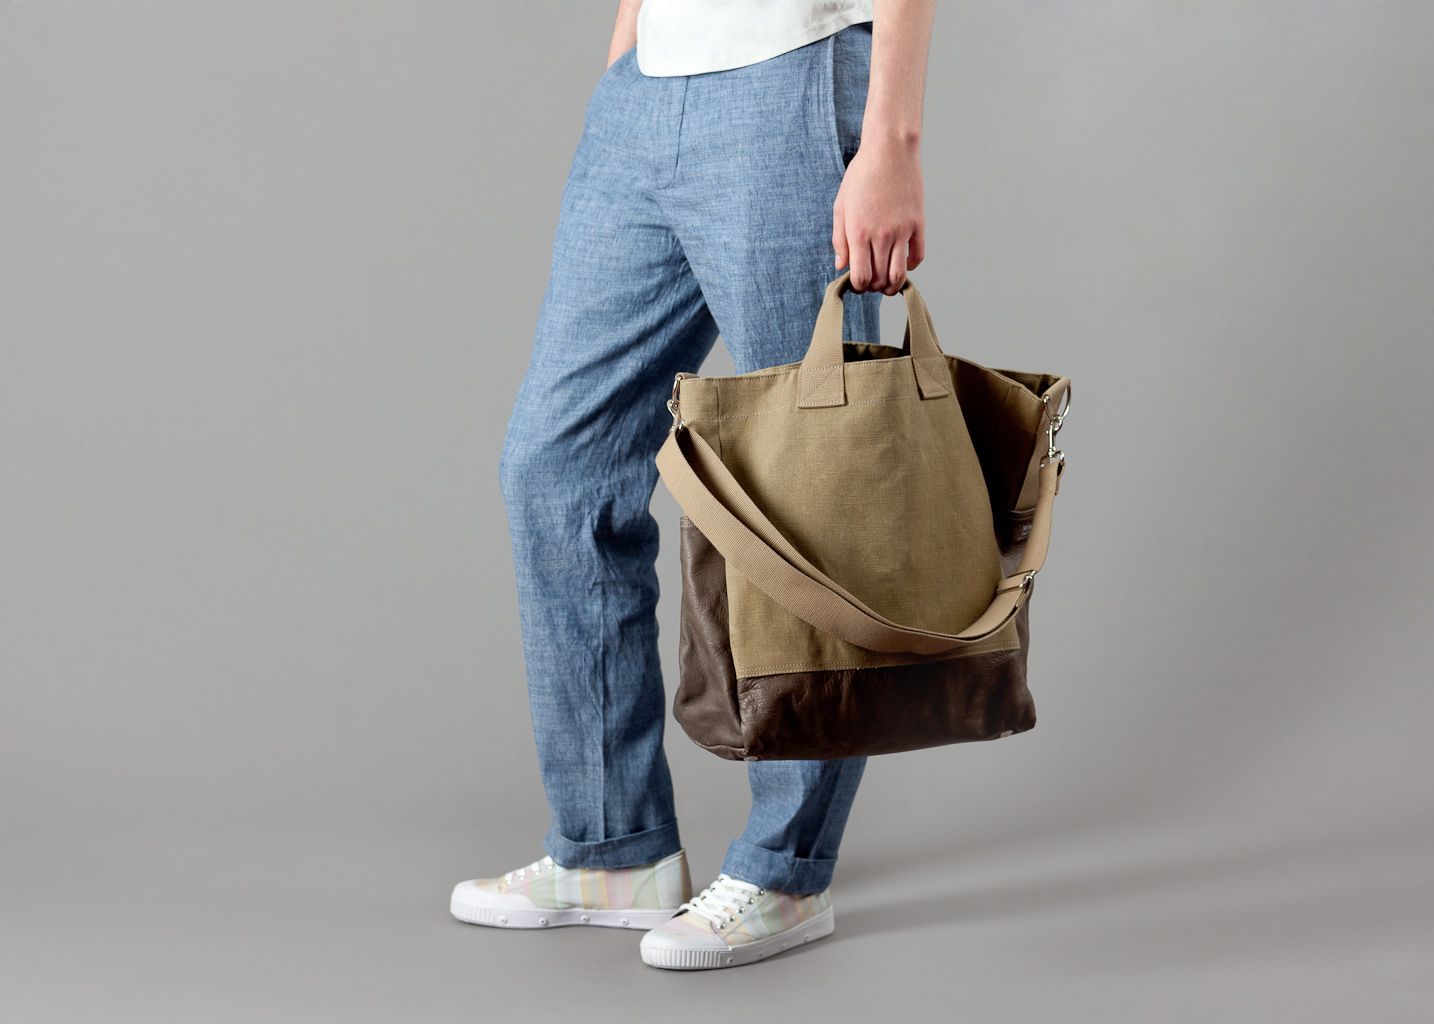 Model N°1 Bag Meilleur Ami Khaki L'Exception